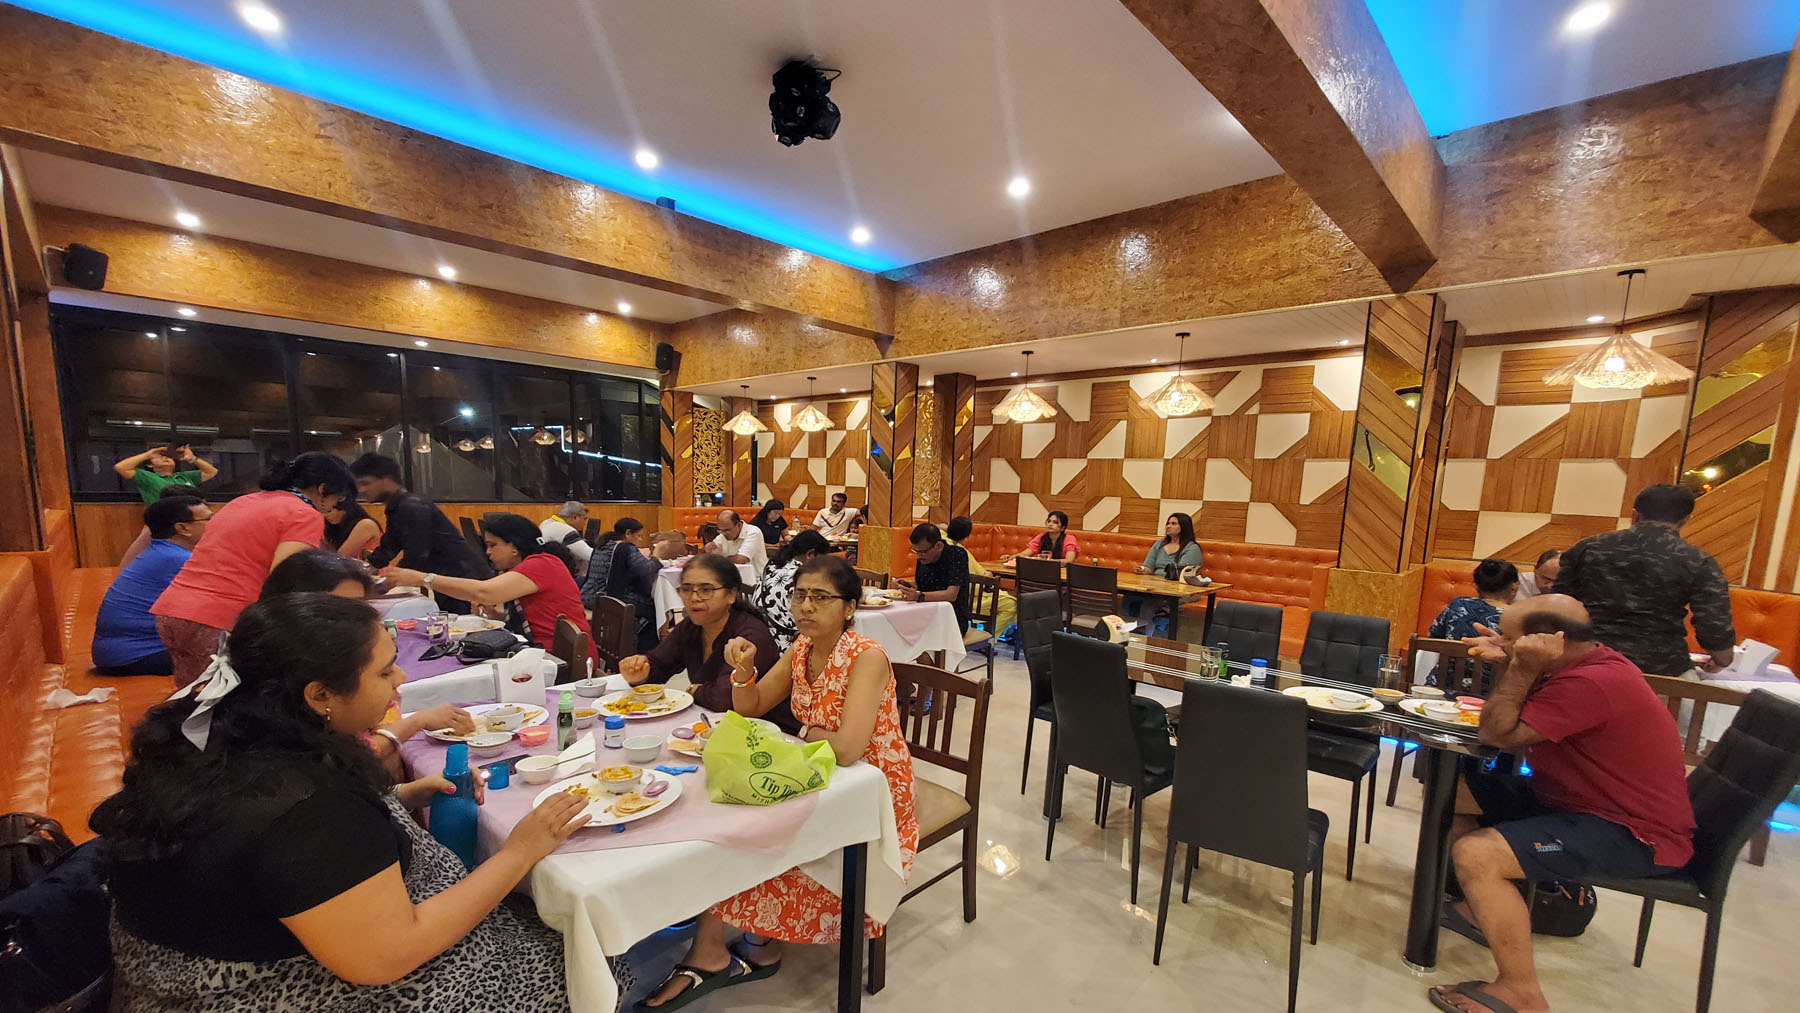 Bombay Palace Restaurant in Ao nang Krabi